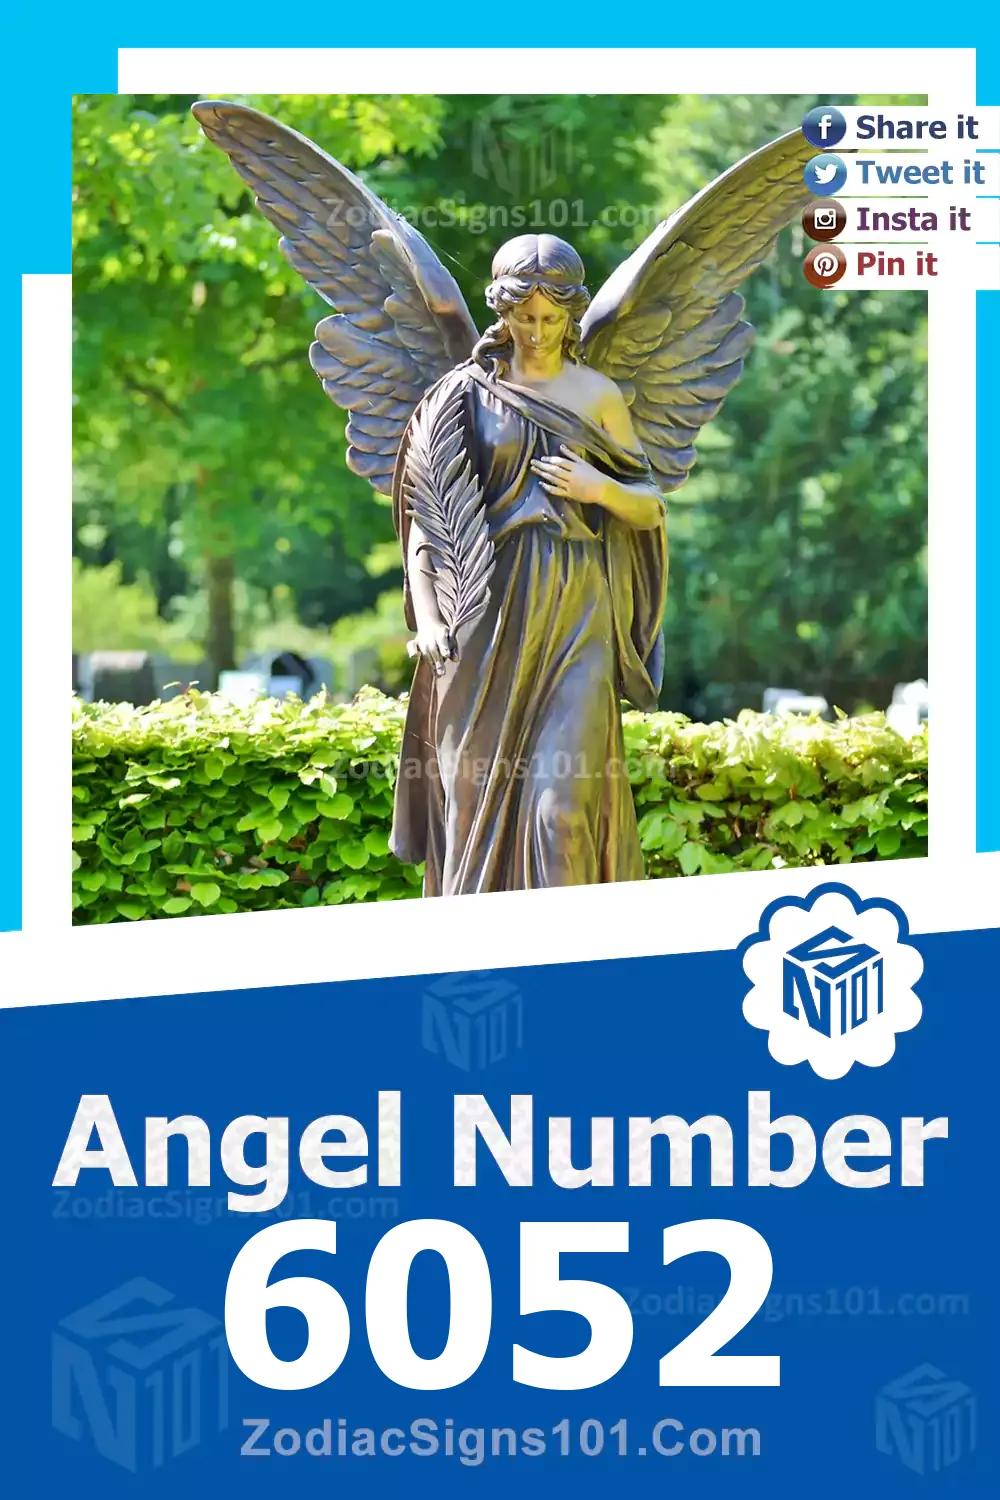 6052-Angel-Number-Meaning.jpg